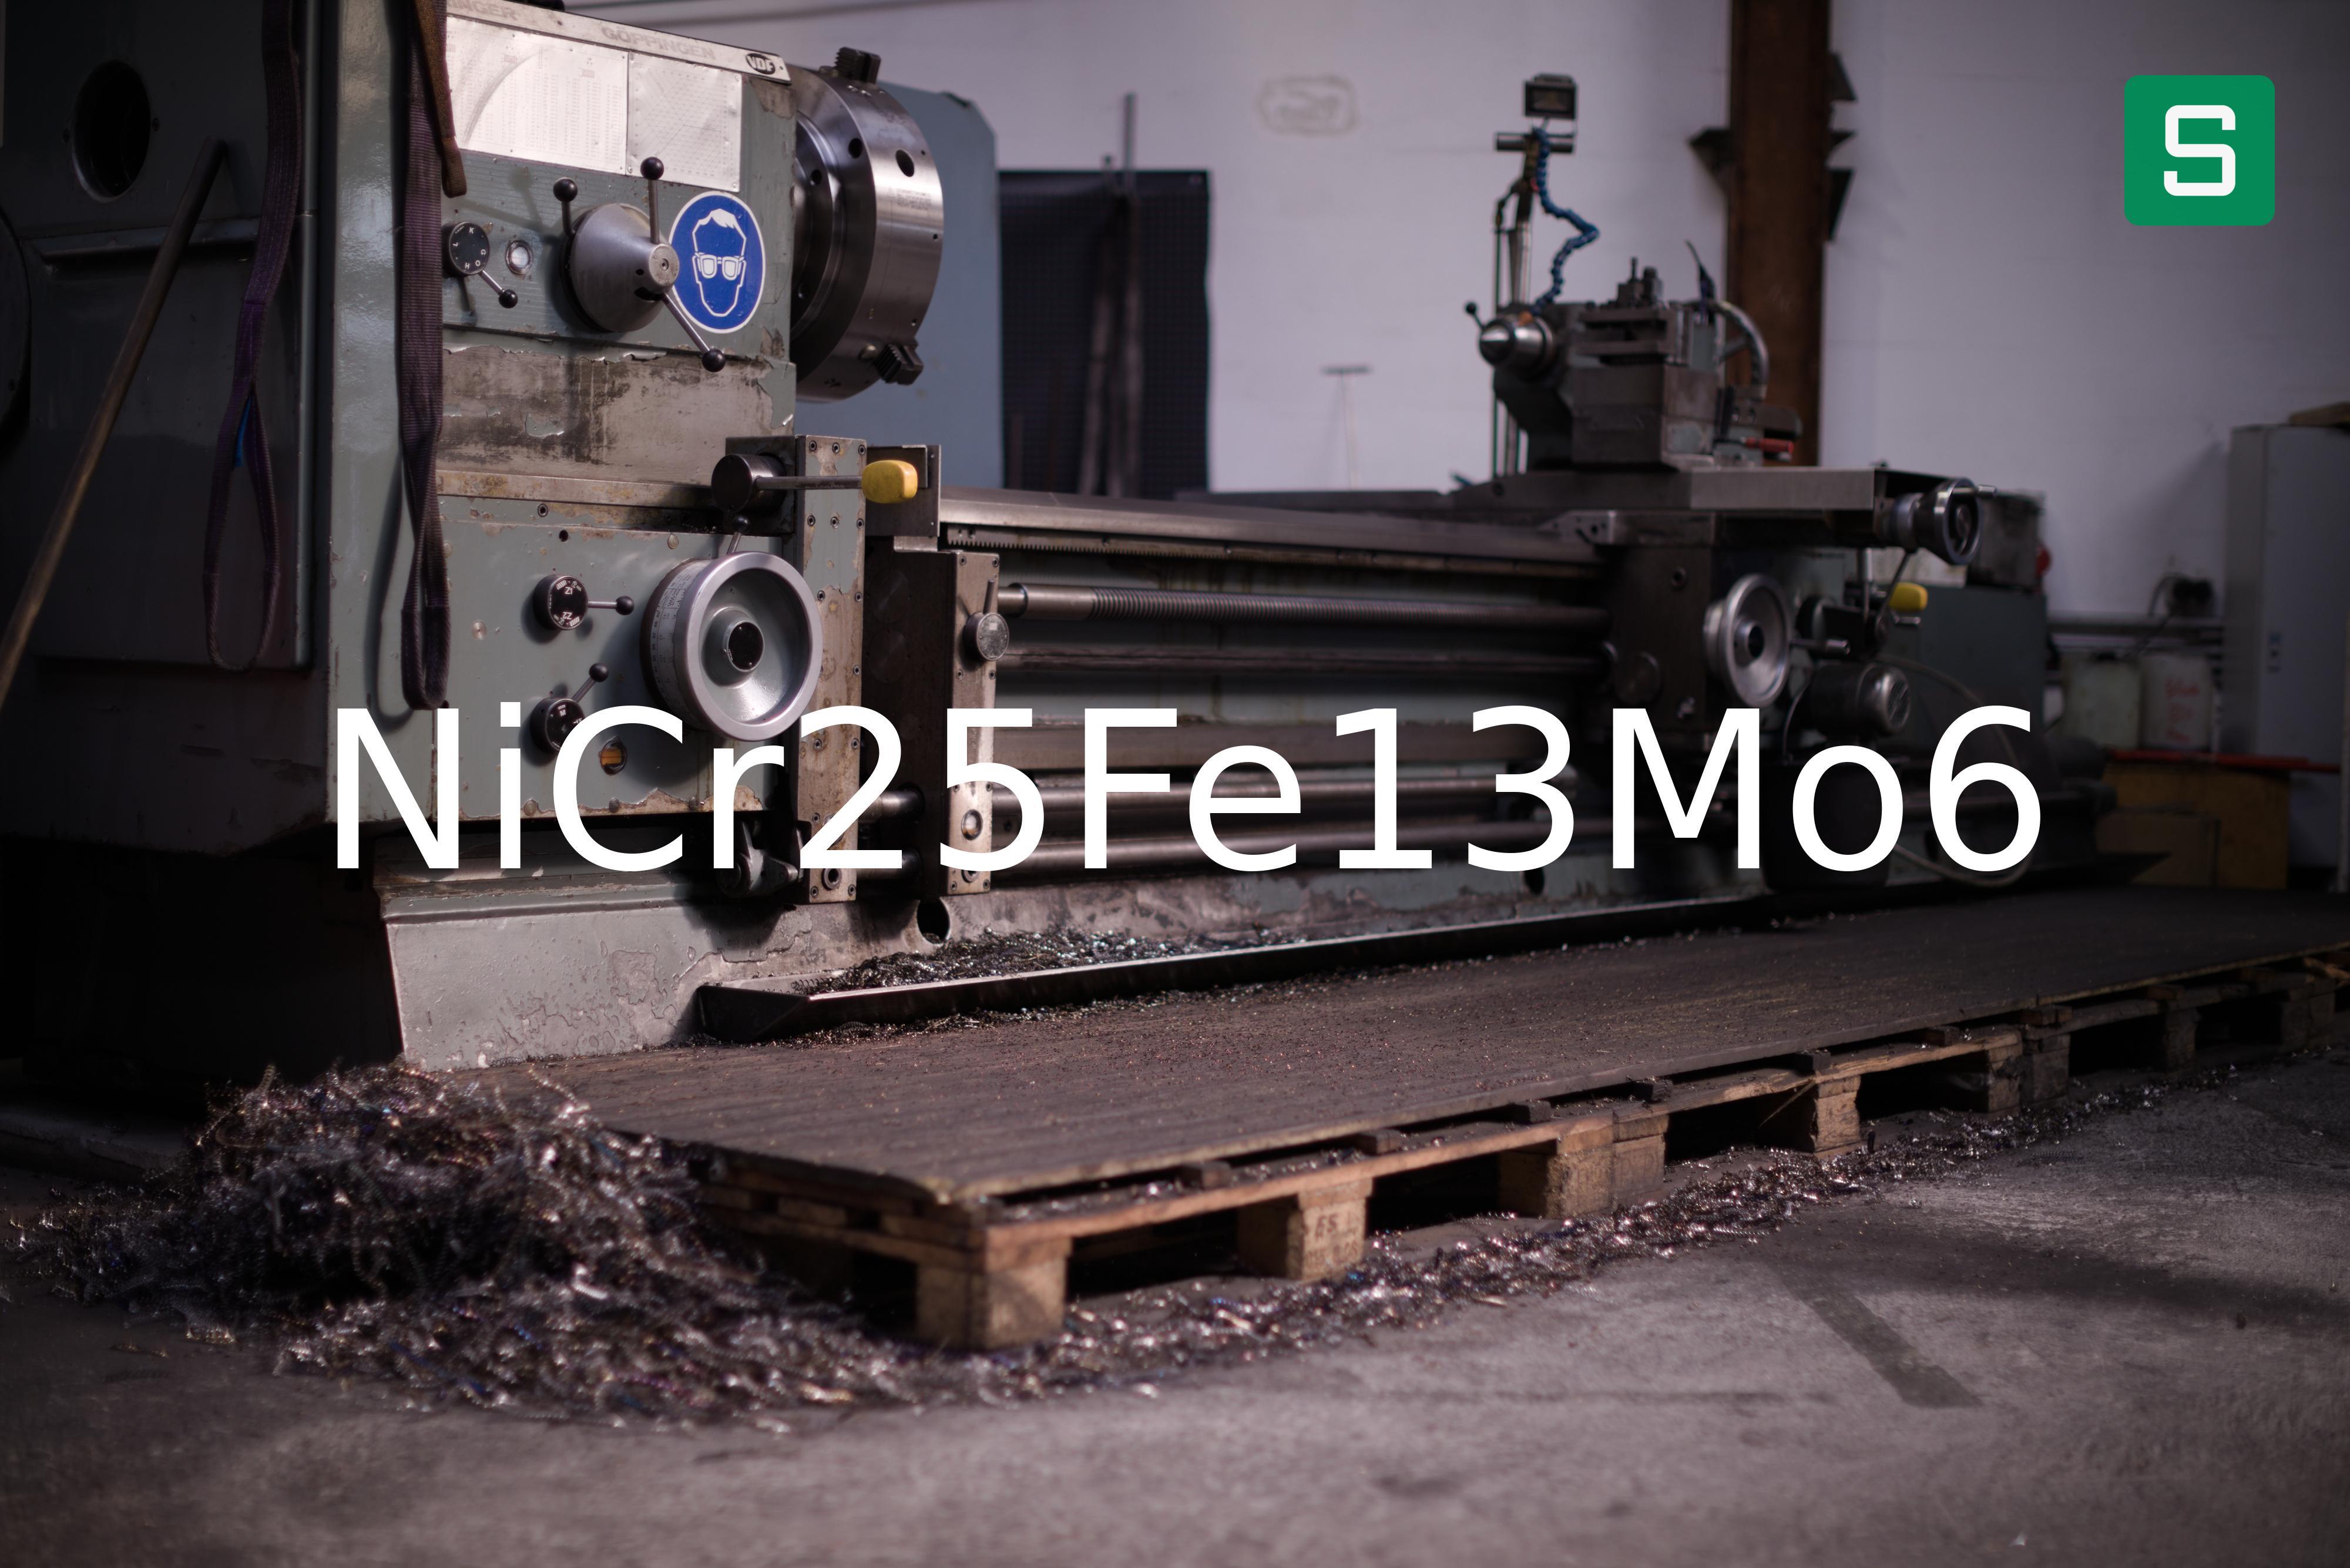 Steel Material: NiCr25Fe13Mo6